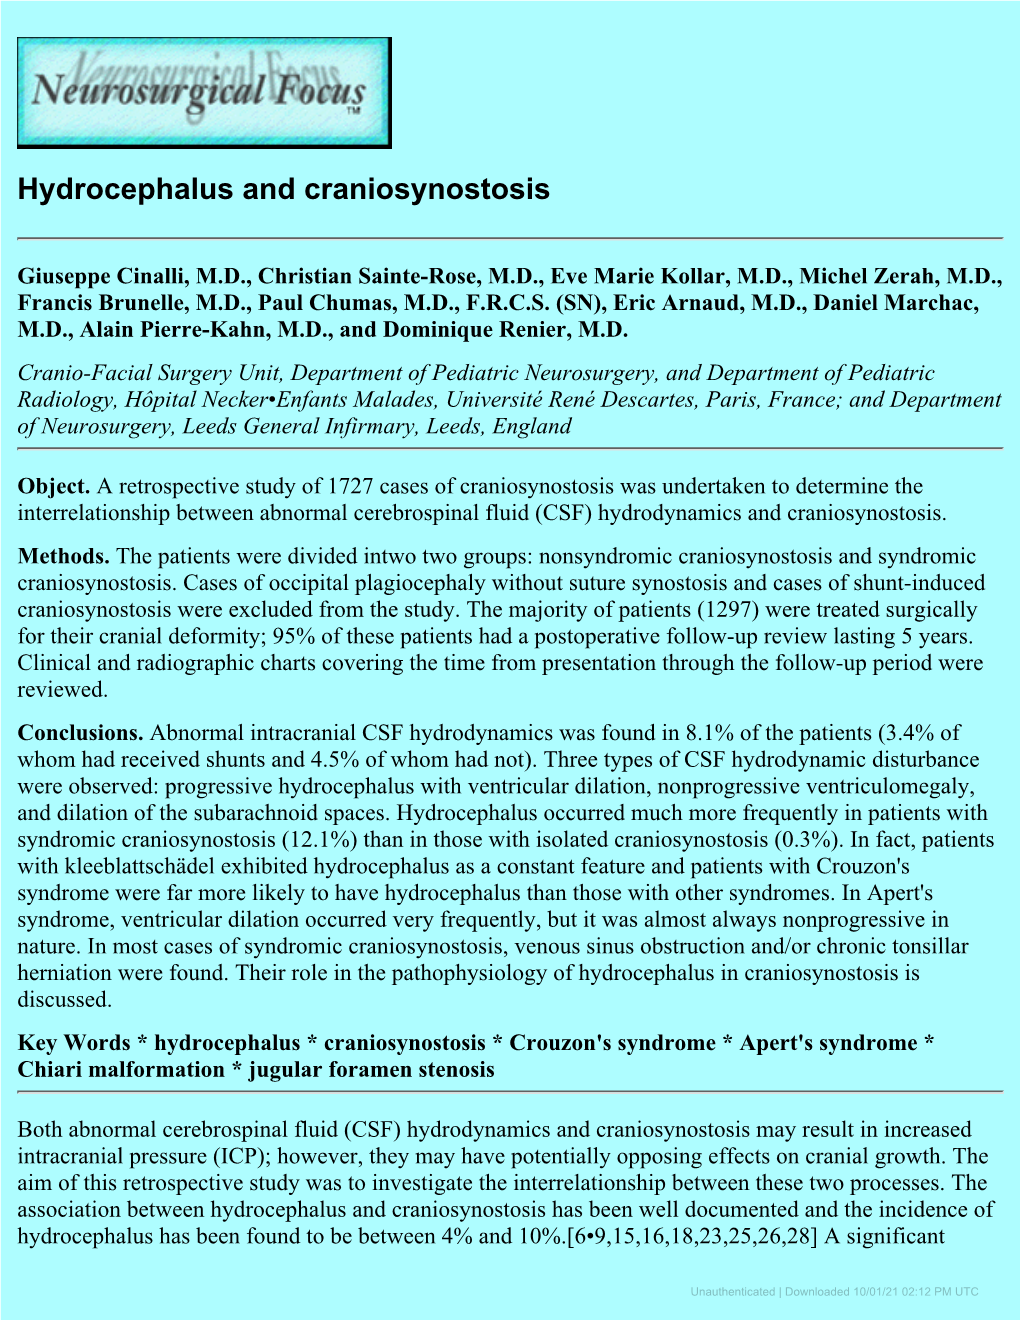 Hydrocephalus and Craniosynostosis